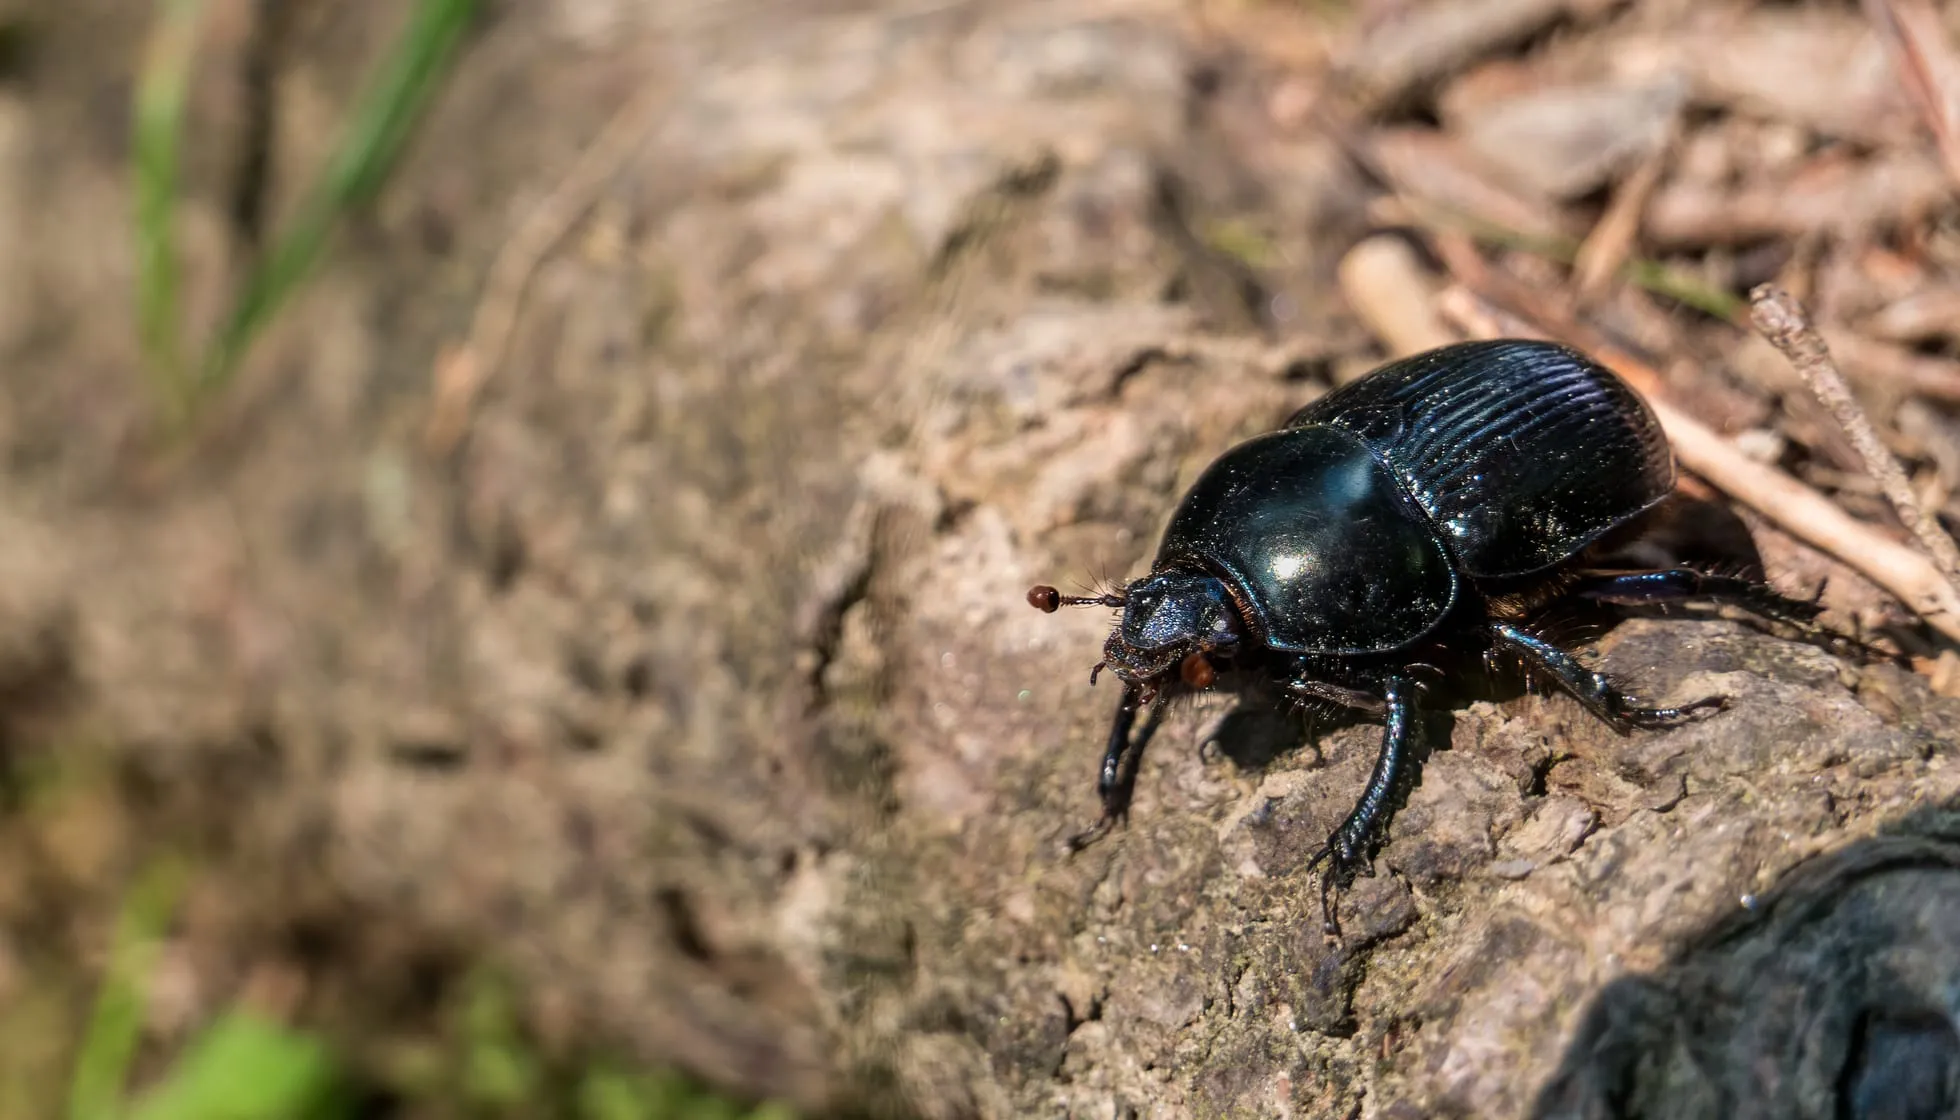 Mountain Pine Beetle on ground